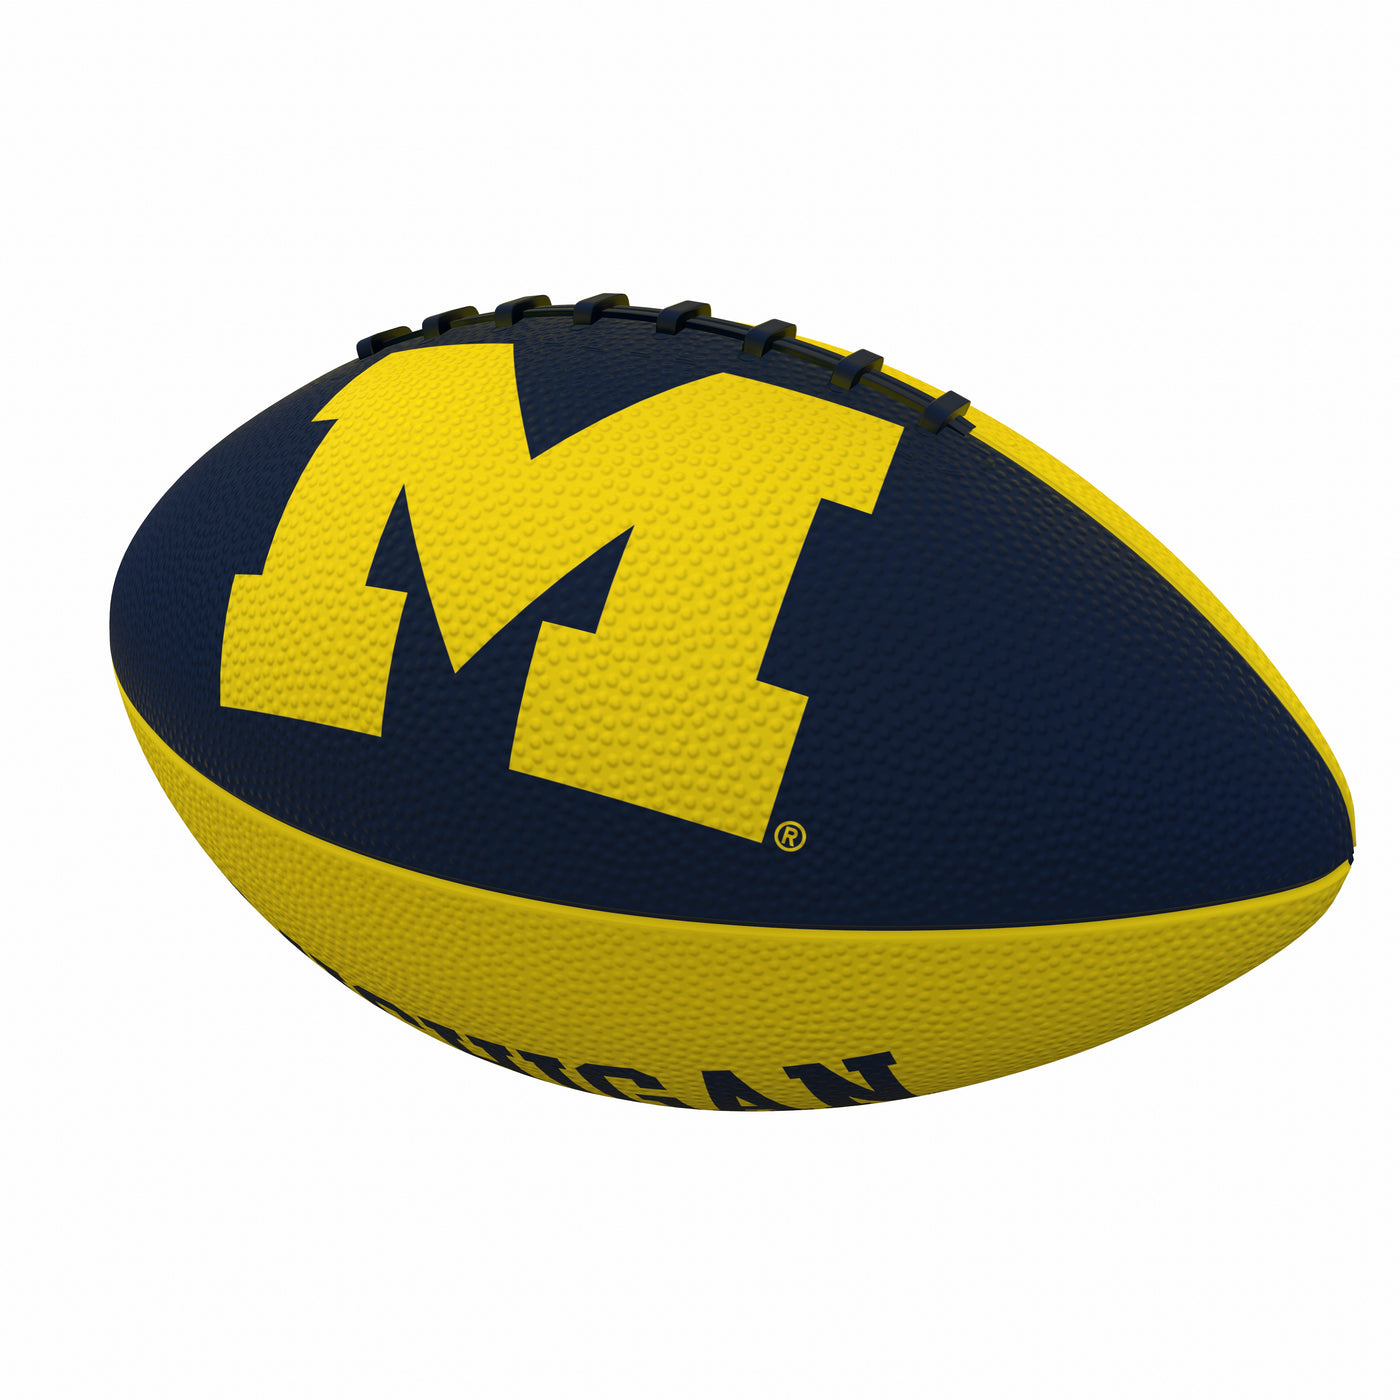 Michigan Pinwheel Logo Junior Size Rubber Football